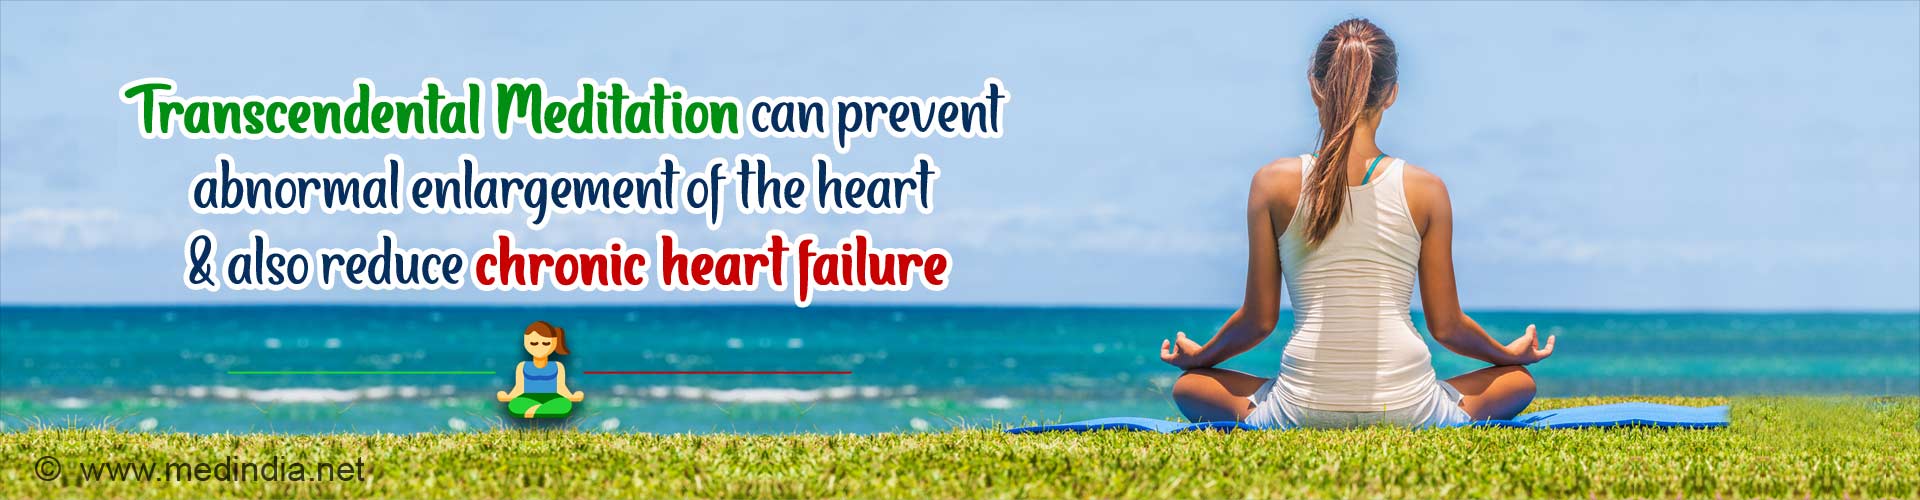 Transcendental Meditation (TM)can help prevent abnormal enlargement of the heart & also reduce chronic heart failure.